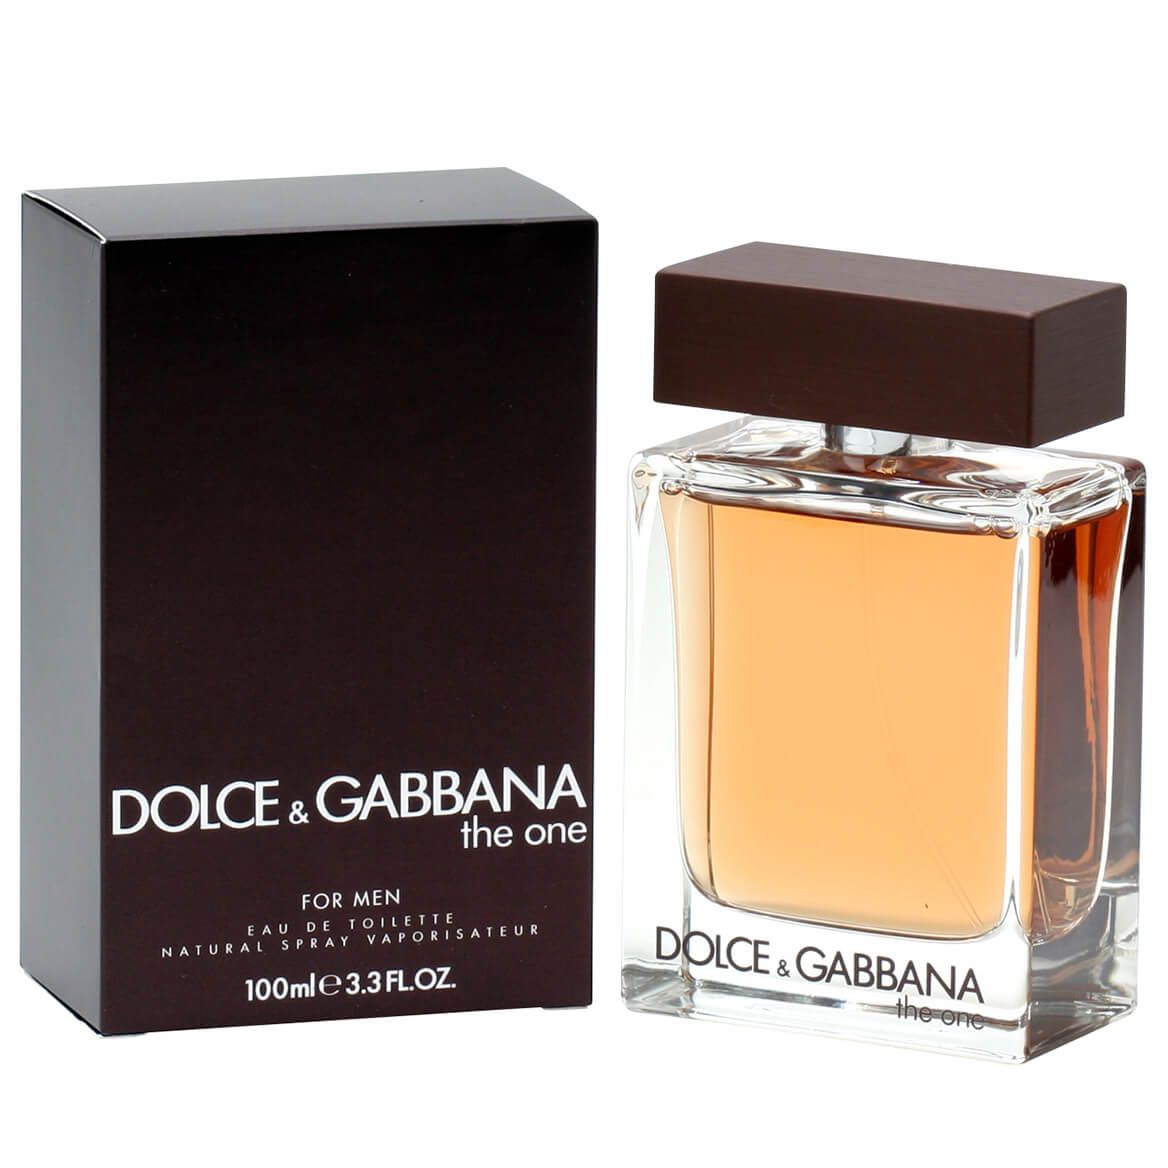 Dolce & Gabbana The One for Men EDT, 3.3 fl. oz. + '-' + 377177